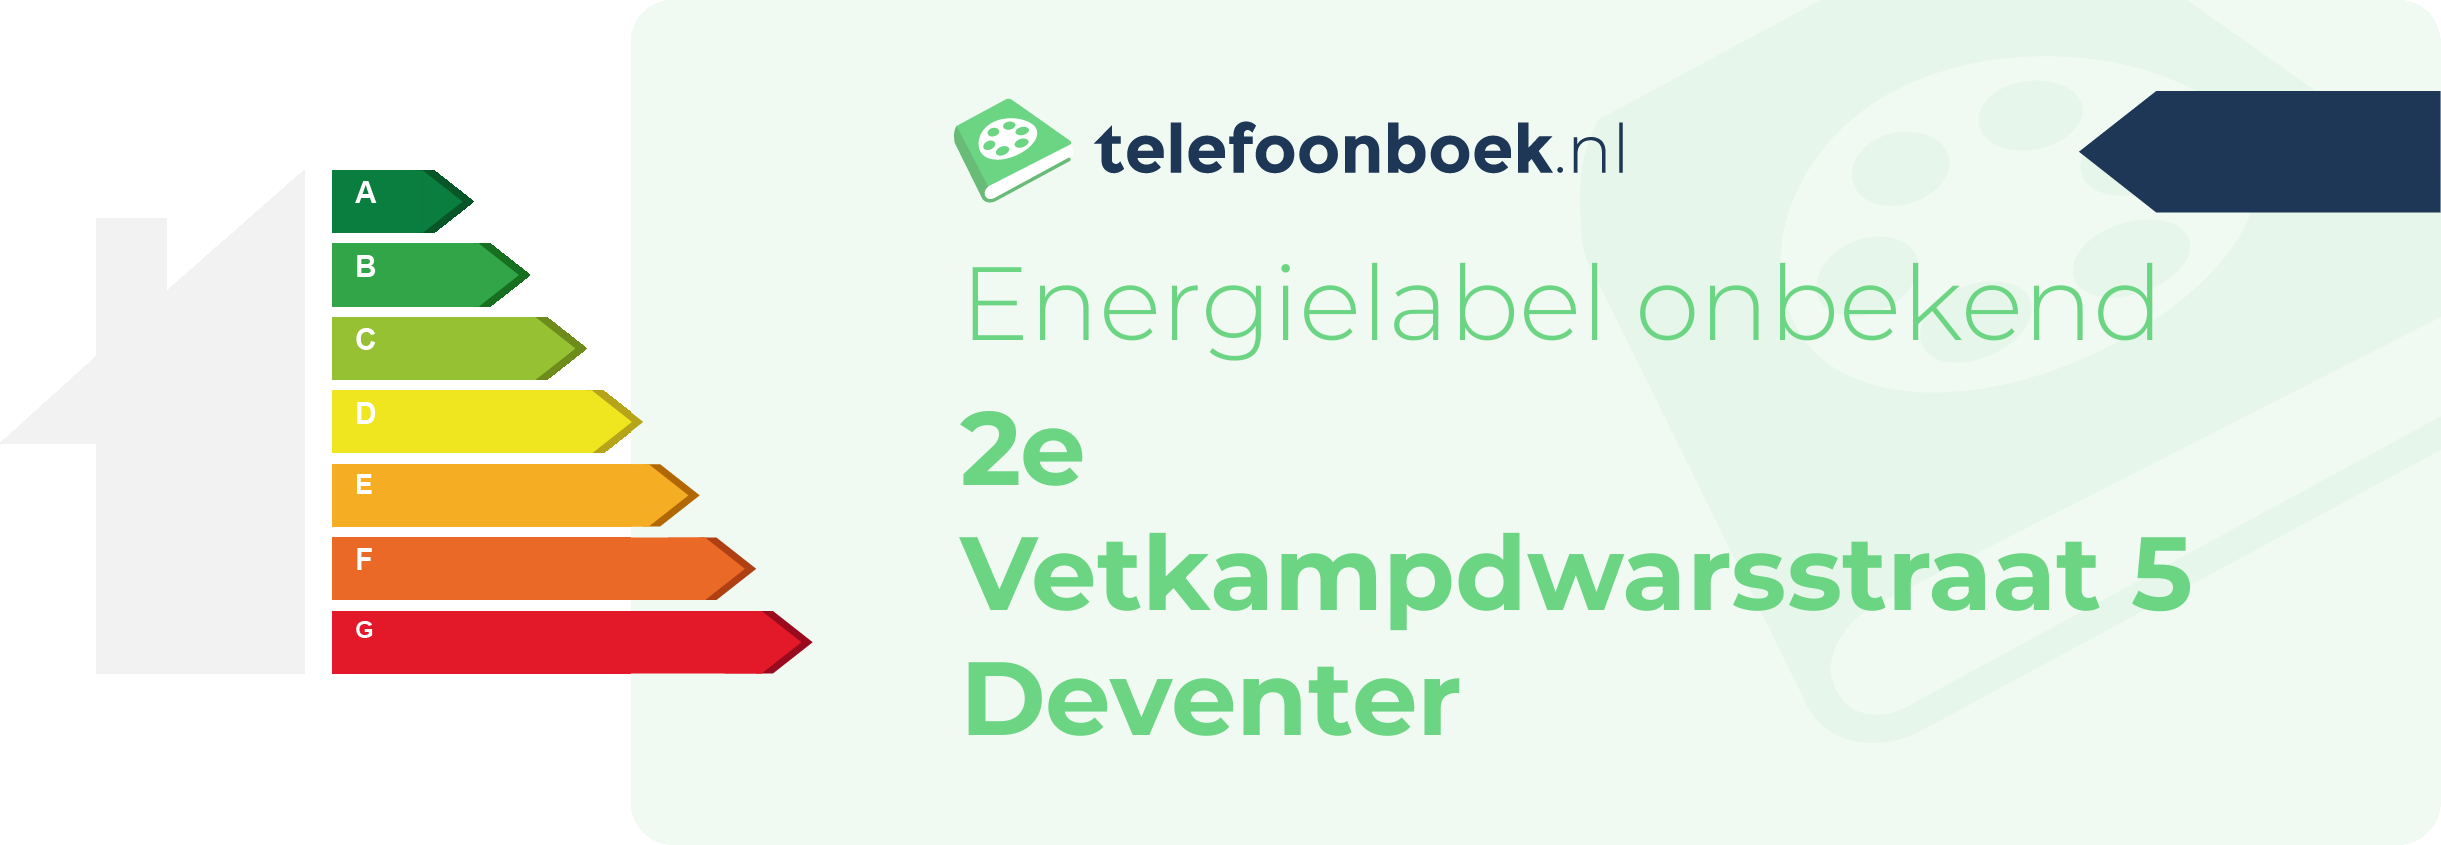 Energielabel 2e Vetkampdwarsstraat 5 Deventer